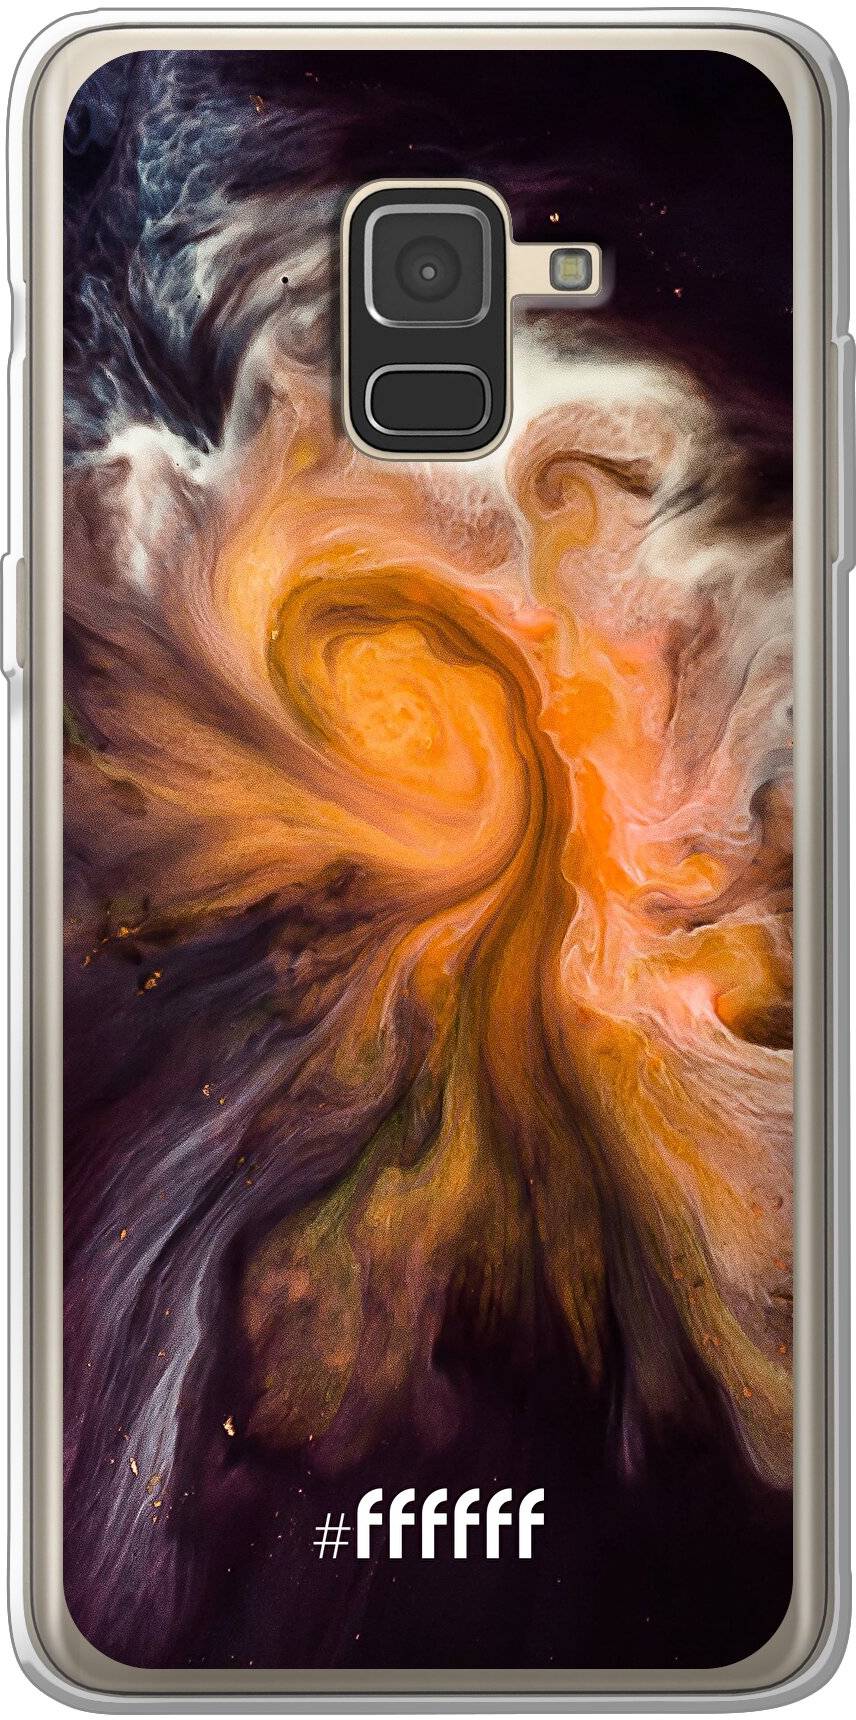 Crazy Space Galaxy A8 (2018)